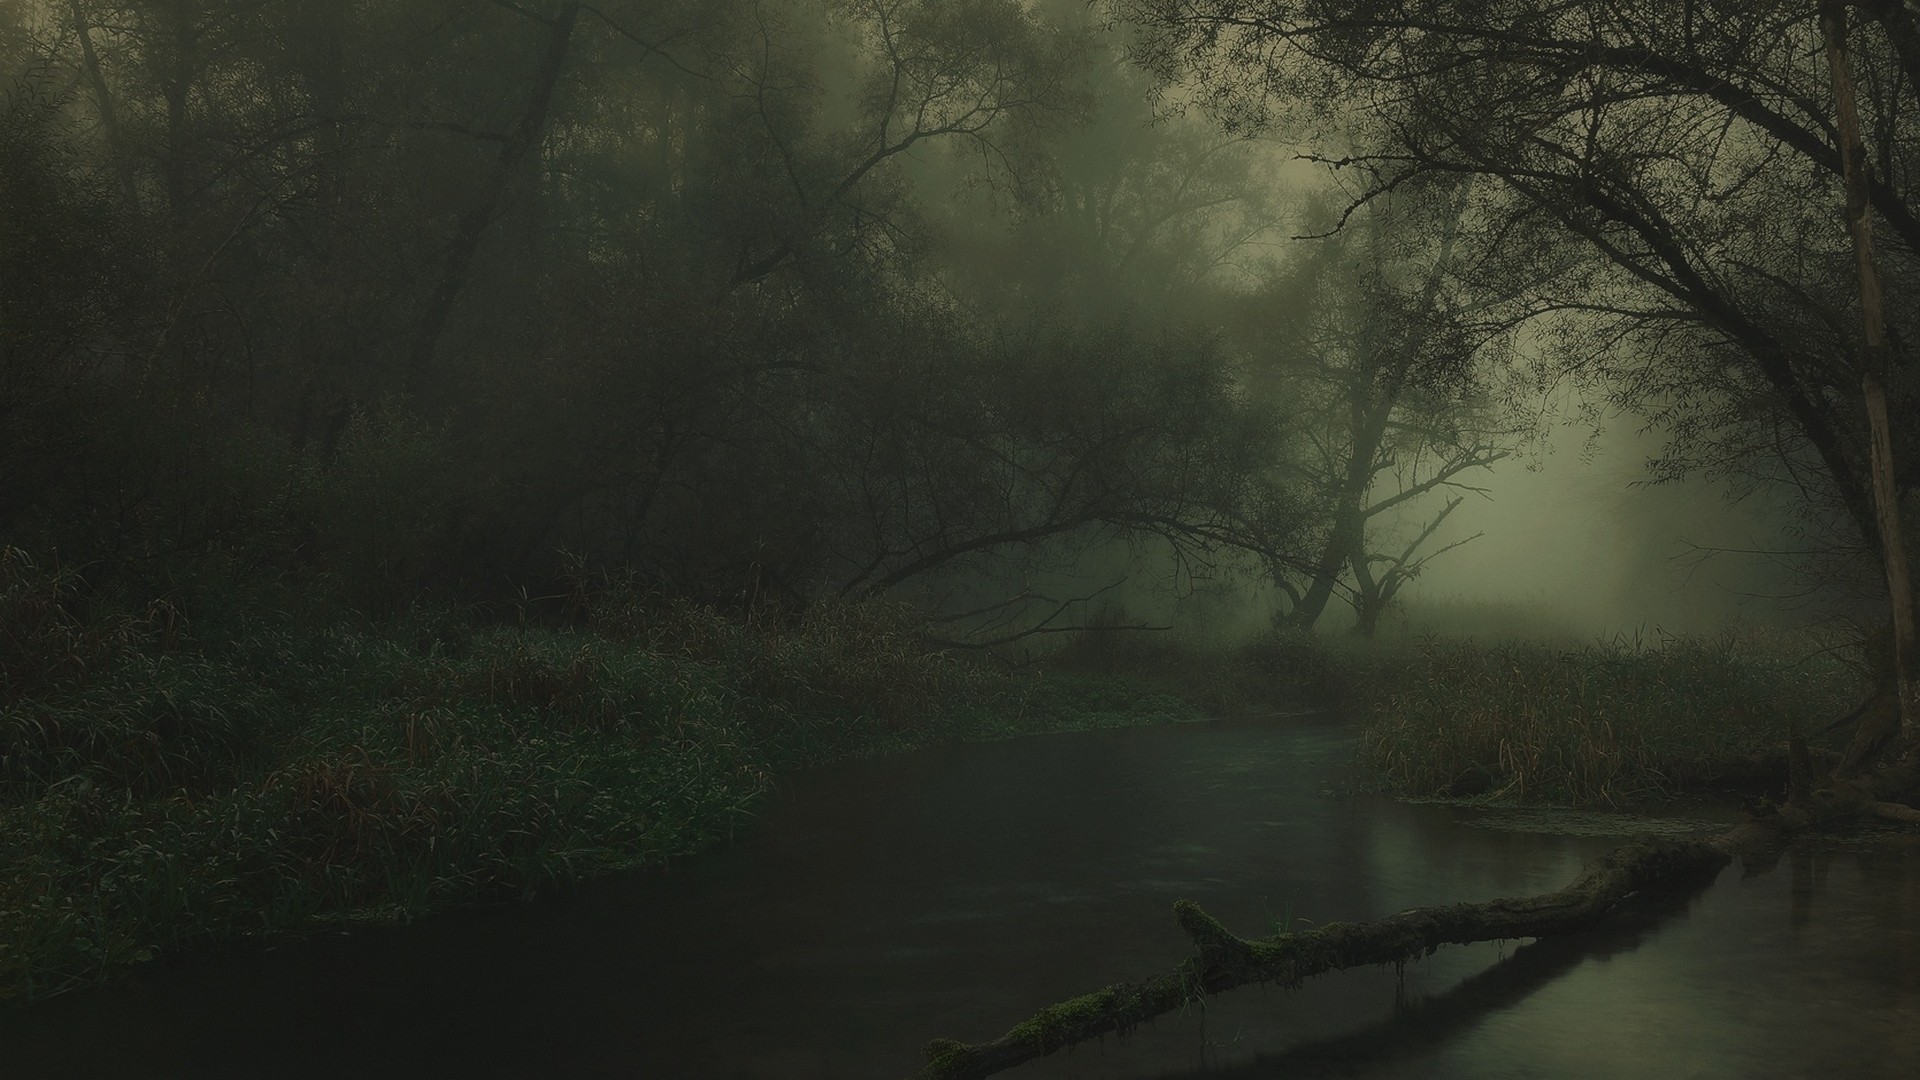 Landscape Nature River Forest Dark Mist Shrubs Trees Atmosphere Germany Reeds 1920x1080